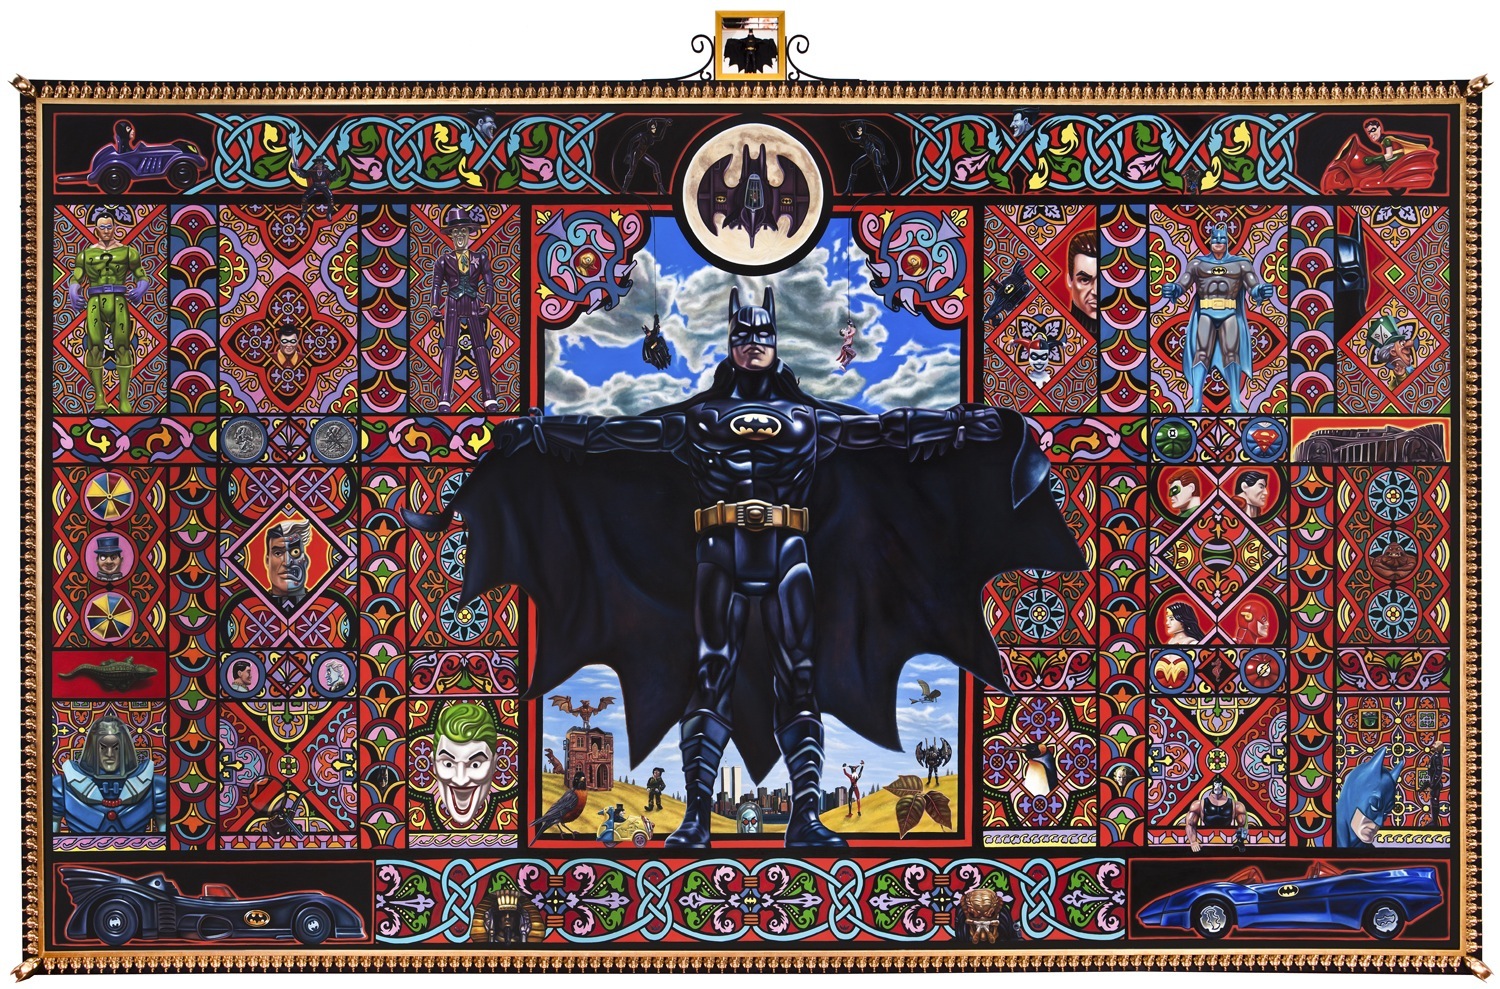 Artwork: 'The Holy Batman'